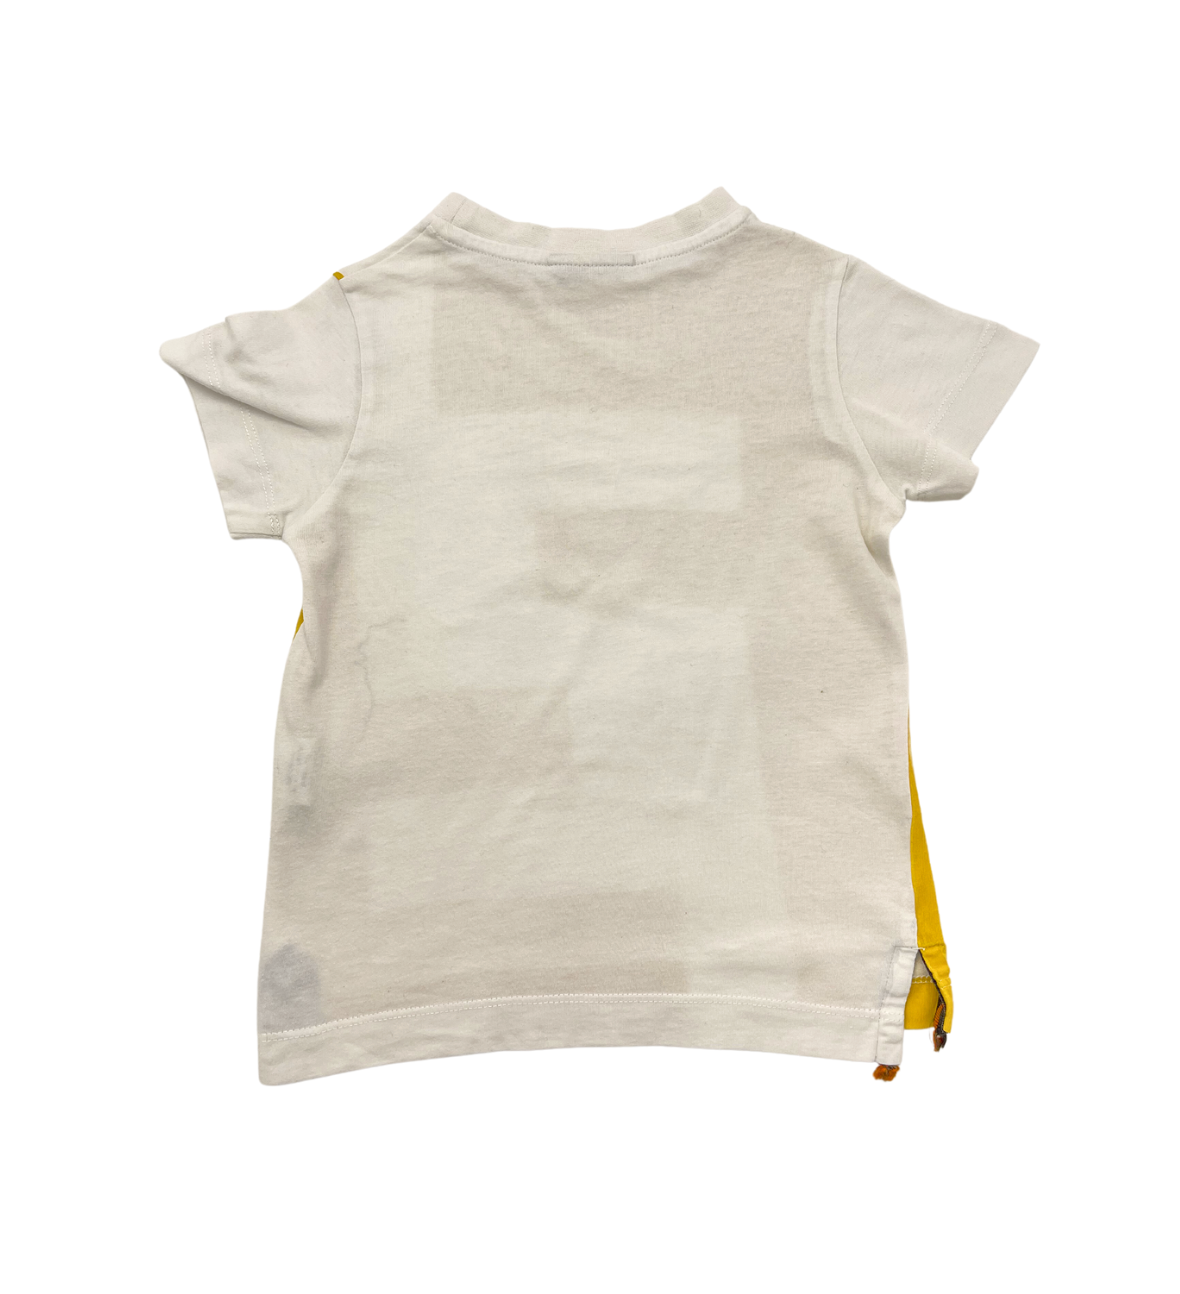 FENDI - T-shirt F jaune - 2 ans